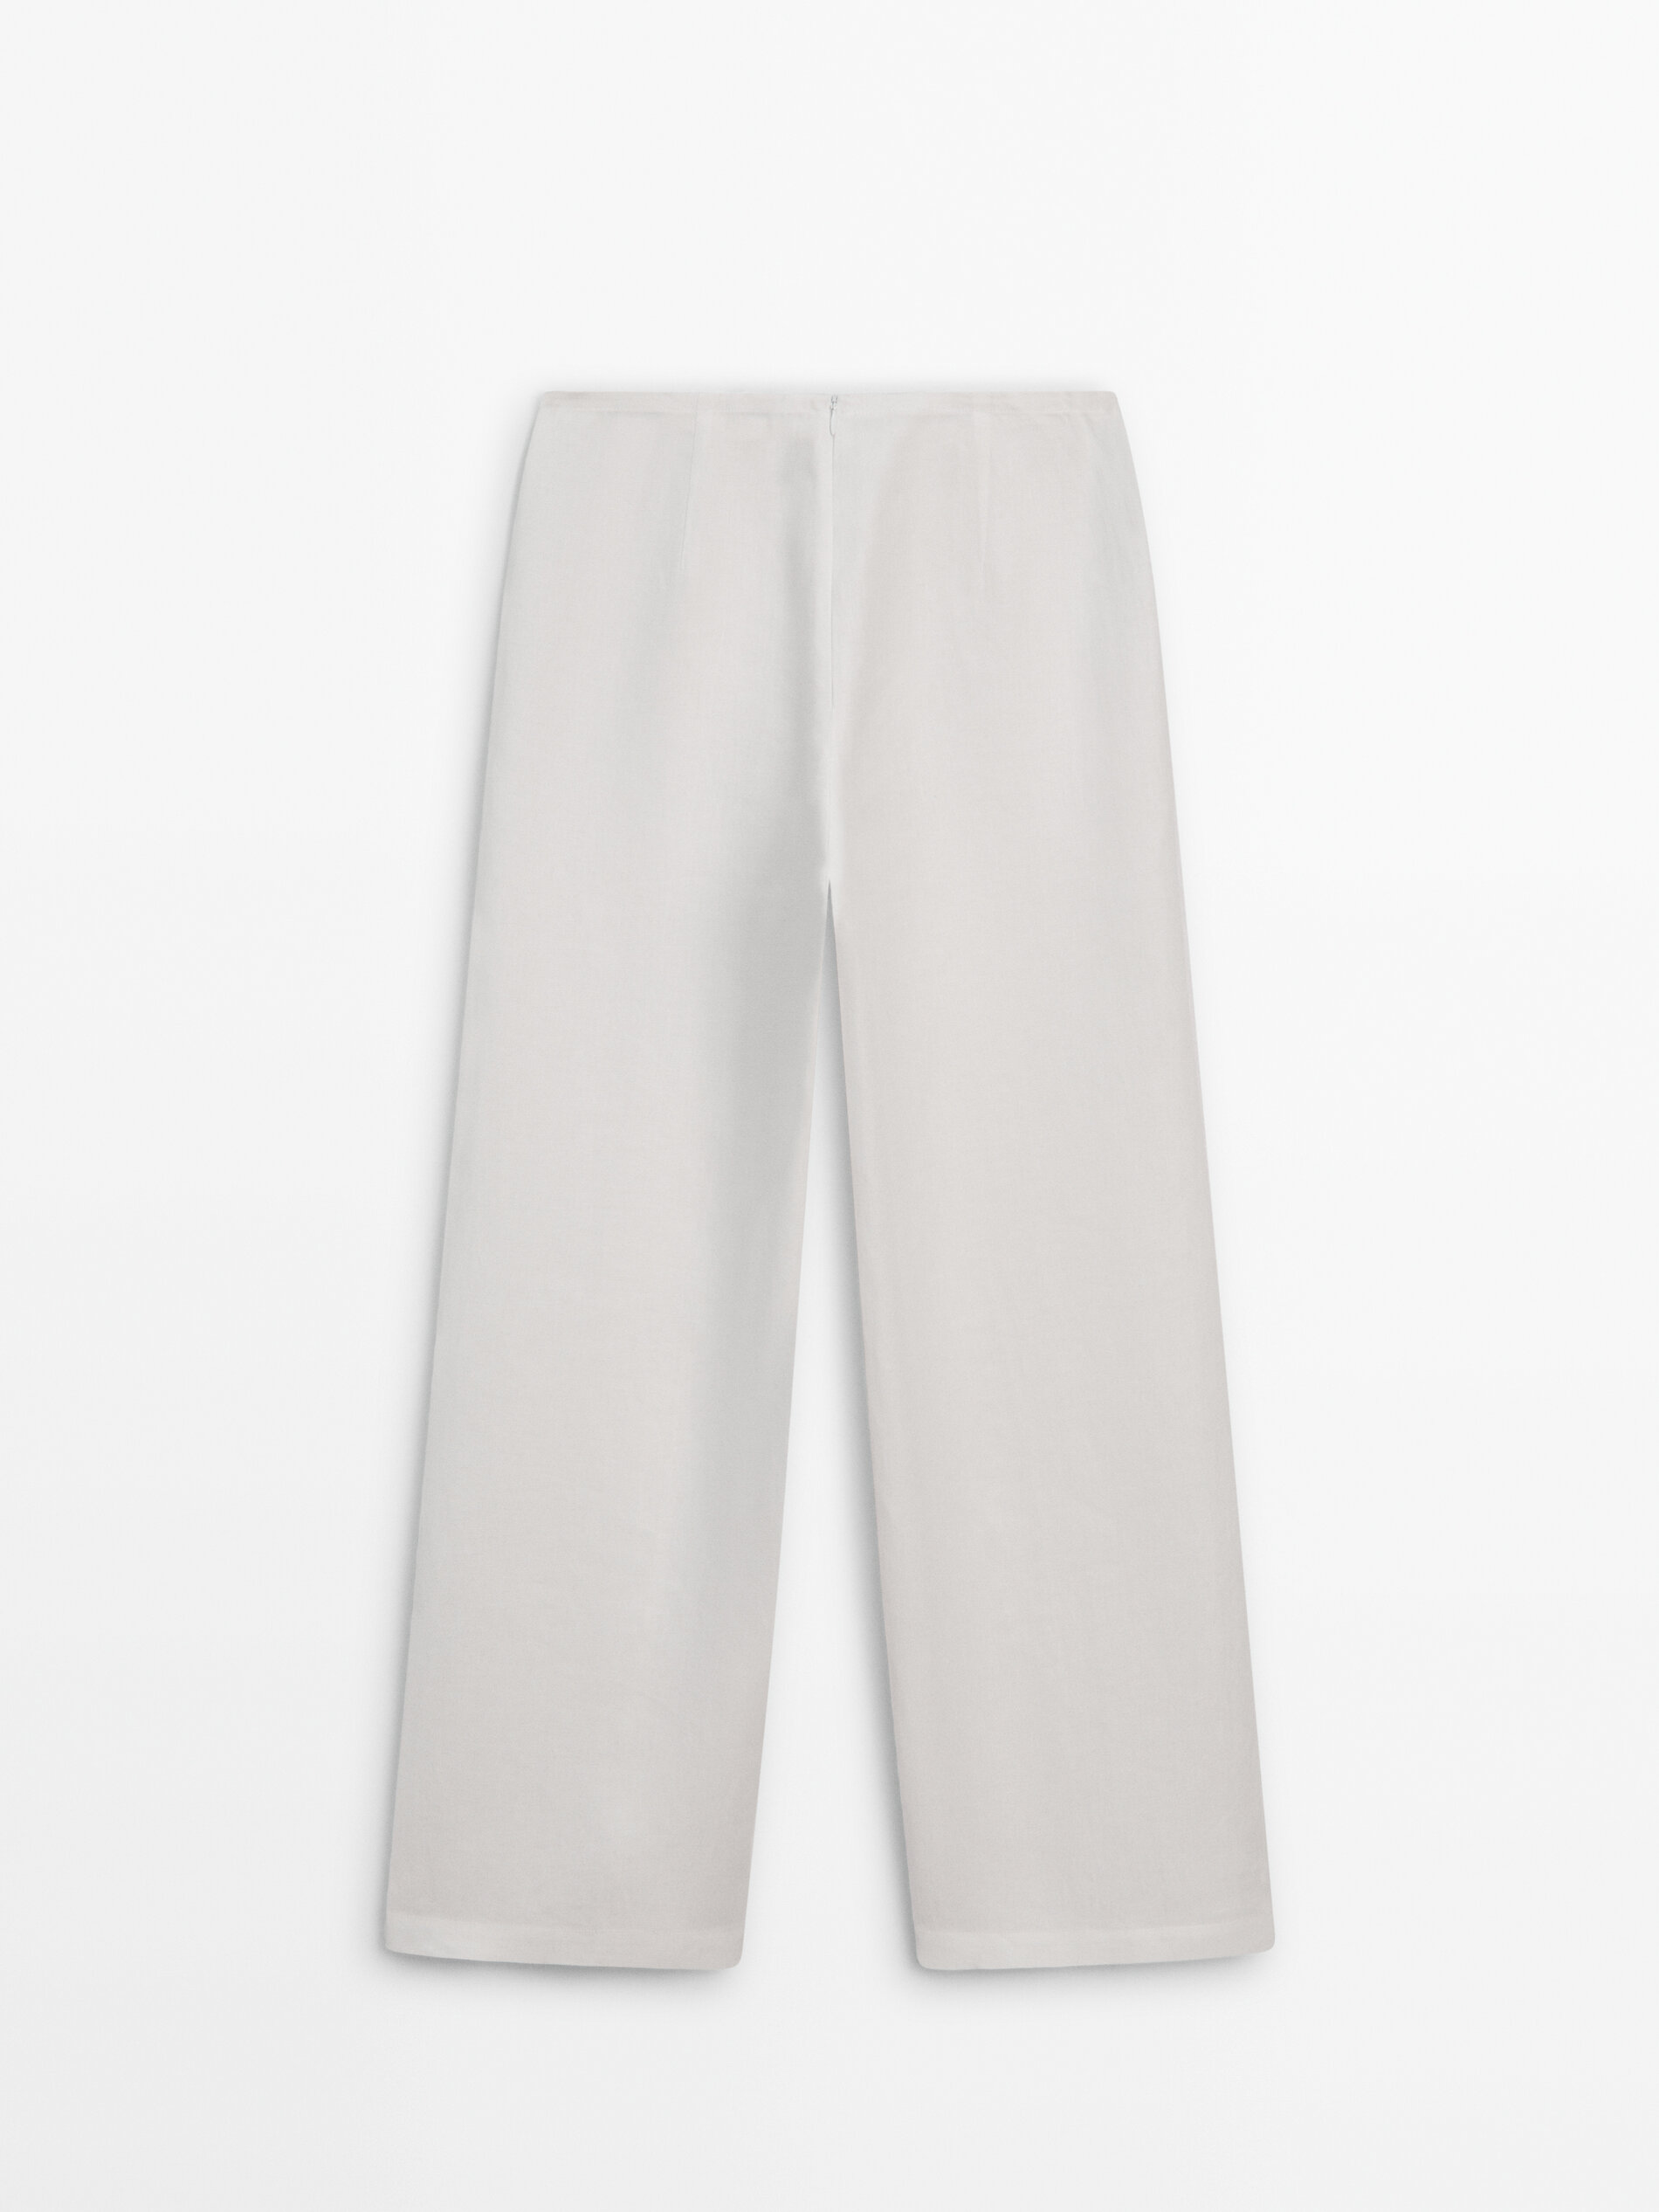 Massimo Dutti Women's Pink Linen Pants Trousers Tapered Leg US Size 4 / EUR  36 | eBay